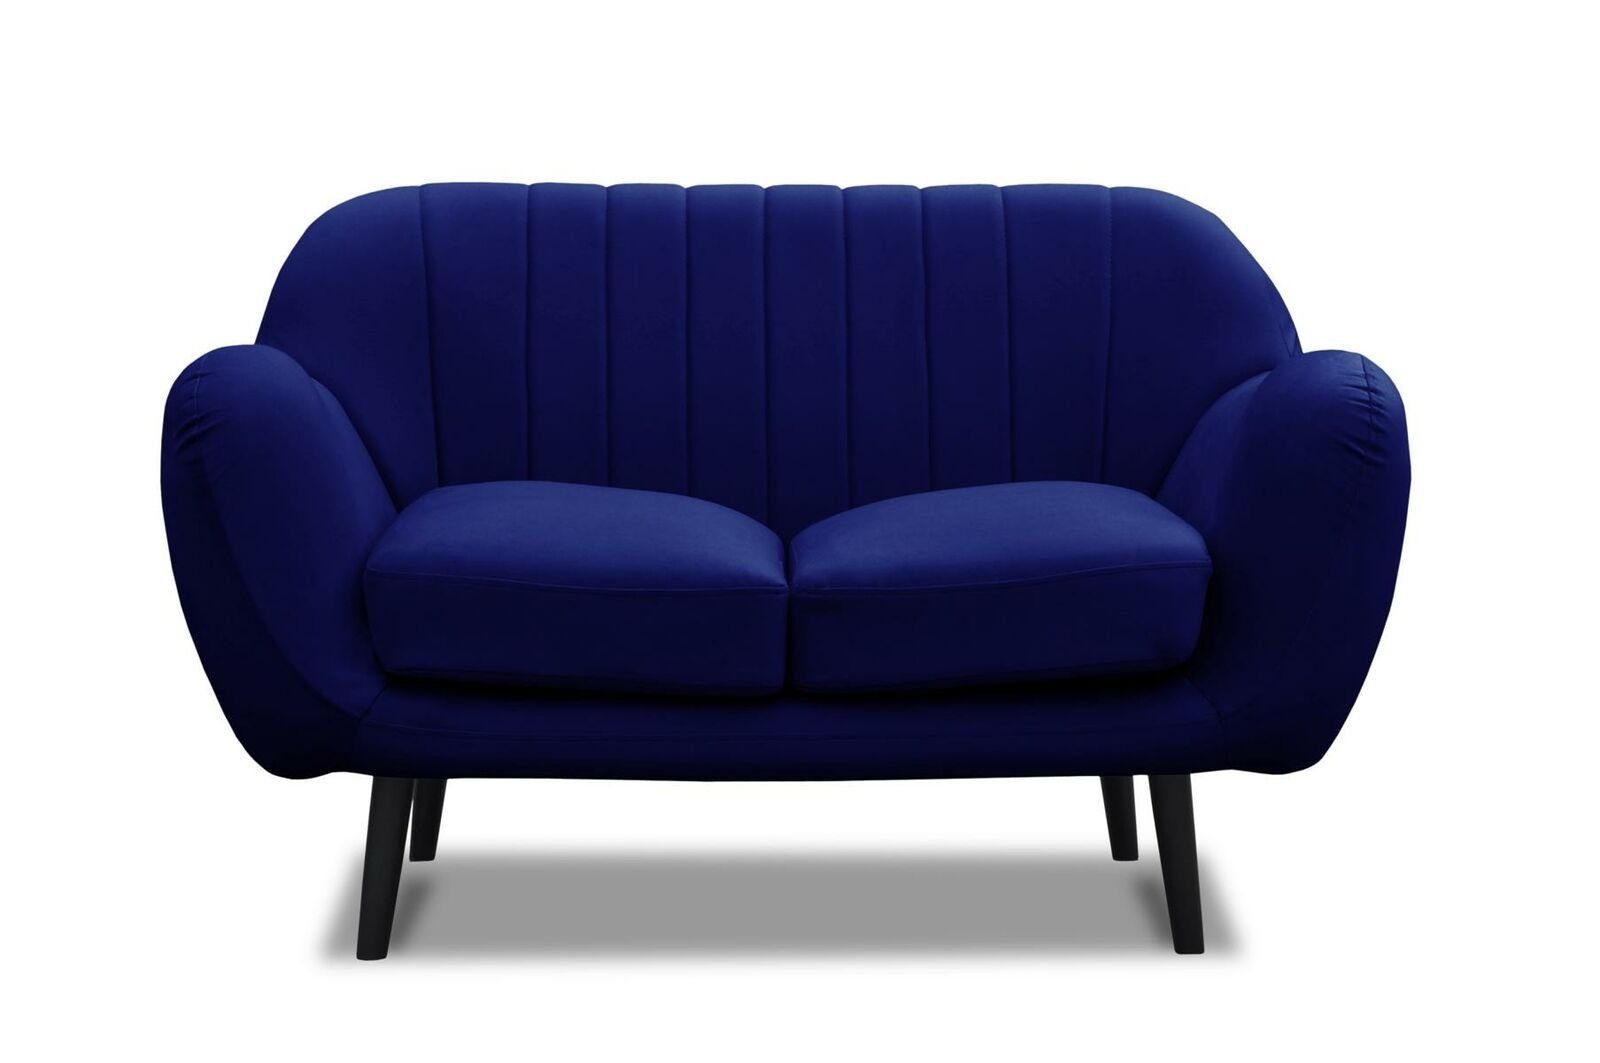 JVmoebel Sofa Blaue Polster Europe Made in Sitzer Couchgarnitur Möbel 3+2+1 Polster Sofagarnitur